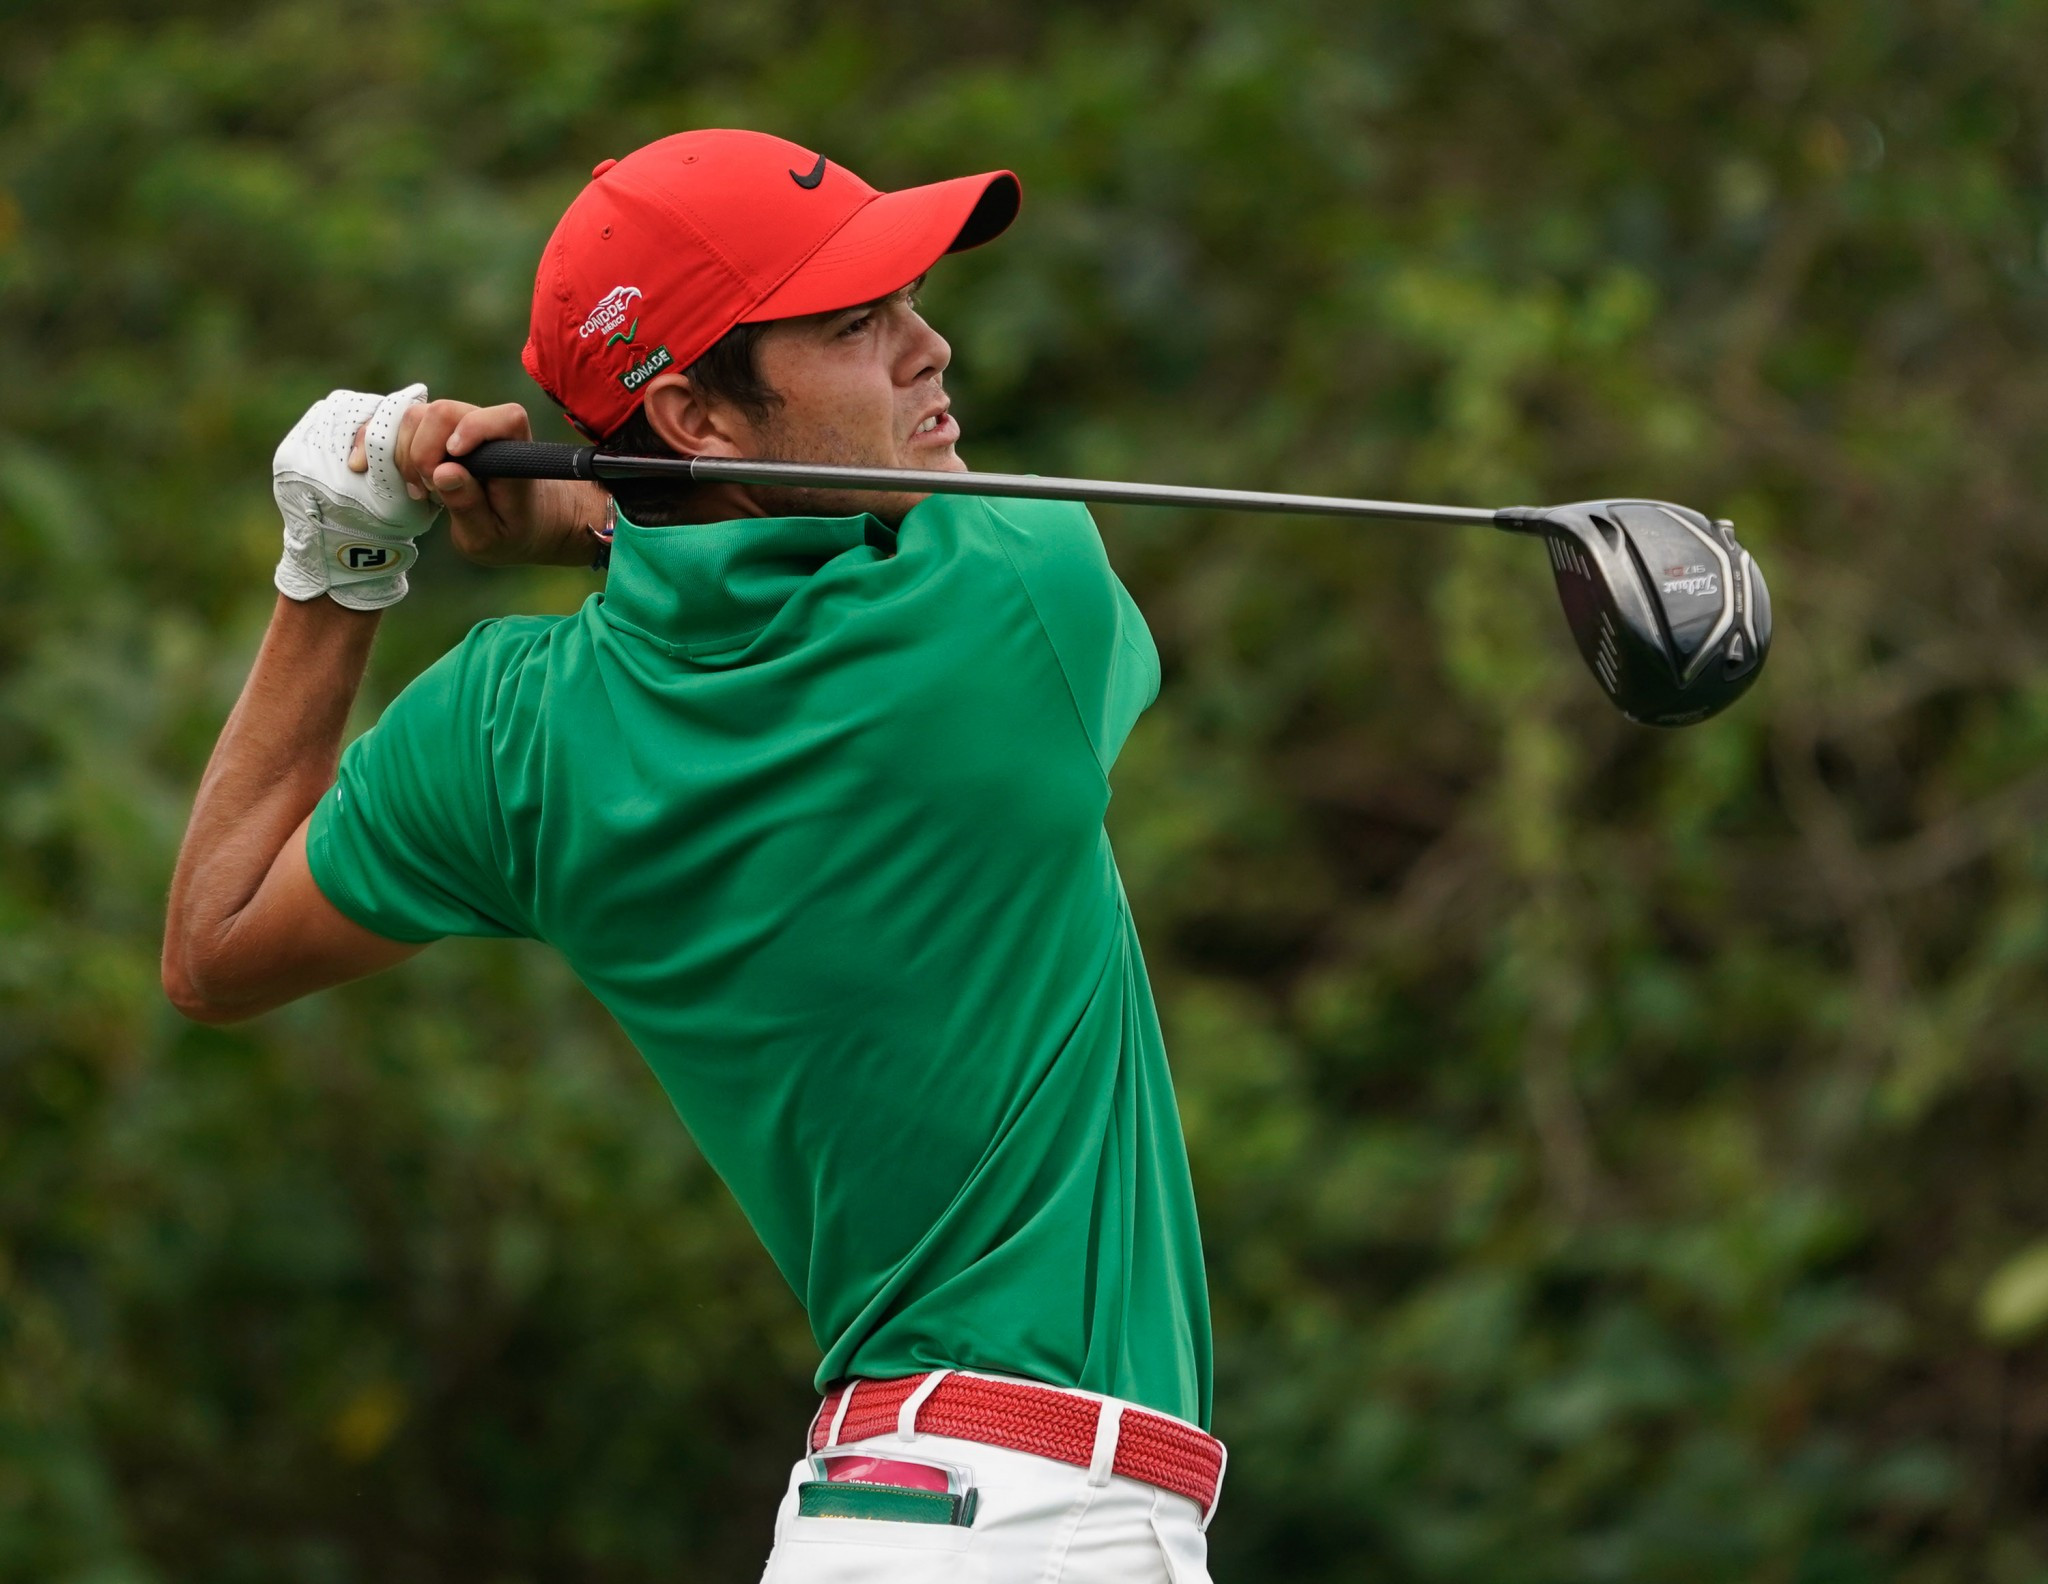 Pereda De La Huerta wins men's golf title following reduction of competition